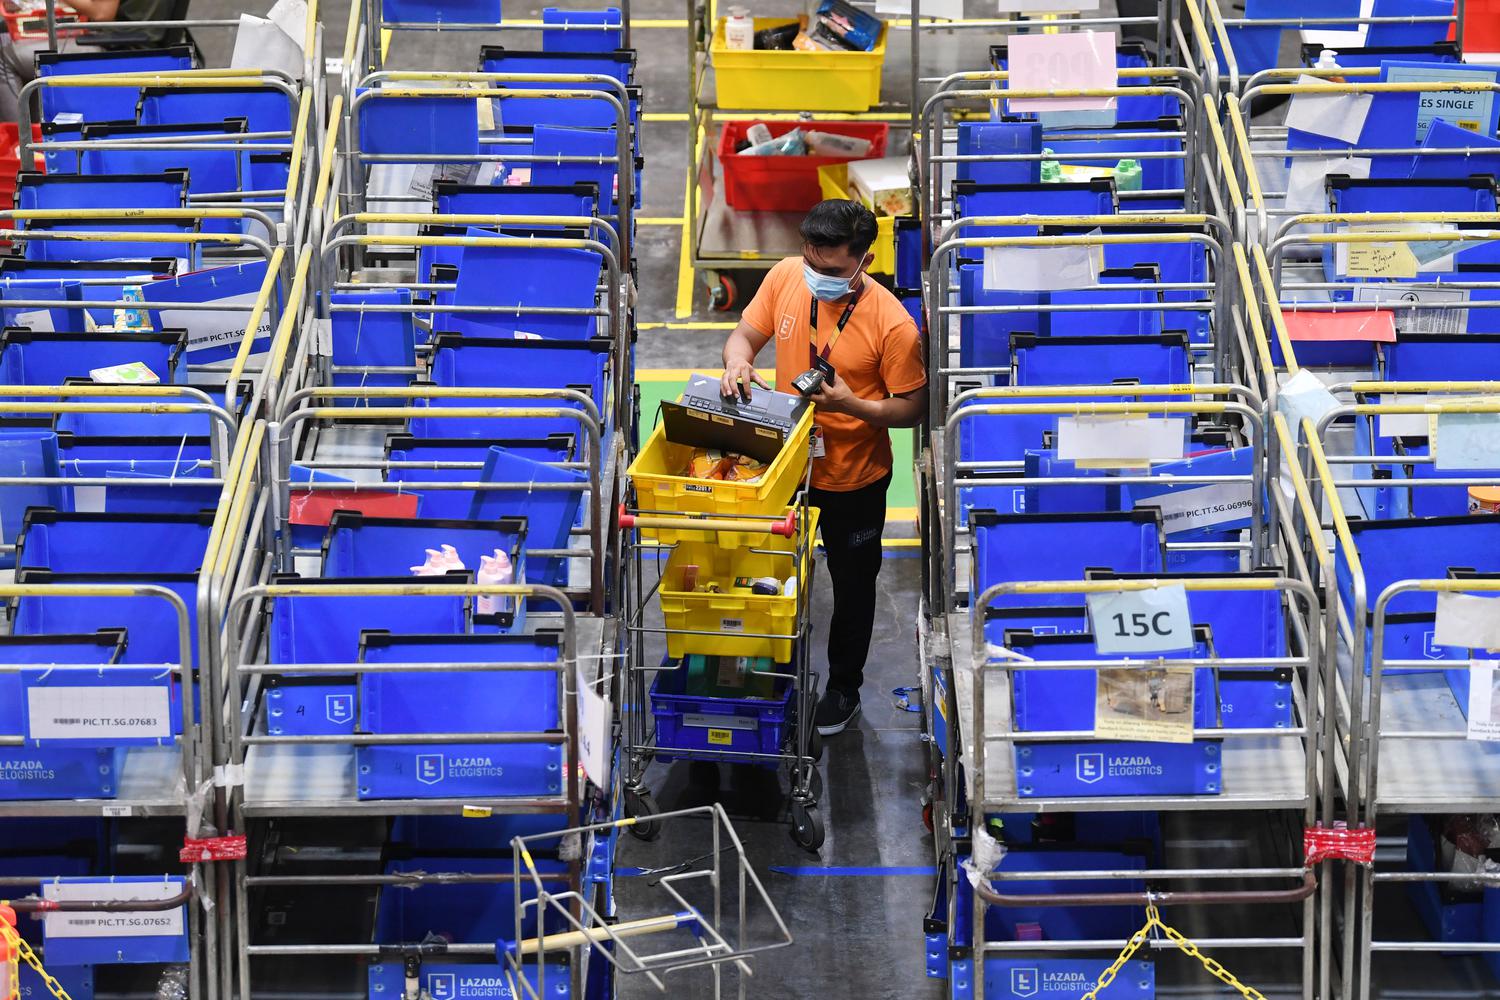 Seorang petugas menyortir barang pesanan konsumen di Warehouse Lazada, Depok, Jawa Barat, Kamis (17/12/2020). Bank Indonesia (BI) mencatat jumlah transaksi jual beli di perdagangan elektronik (e-commerce) hingga kuartal III 2020 mencapai Rp180,74 triliun.